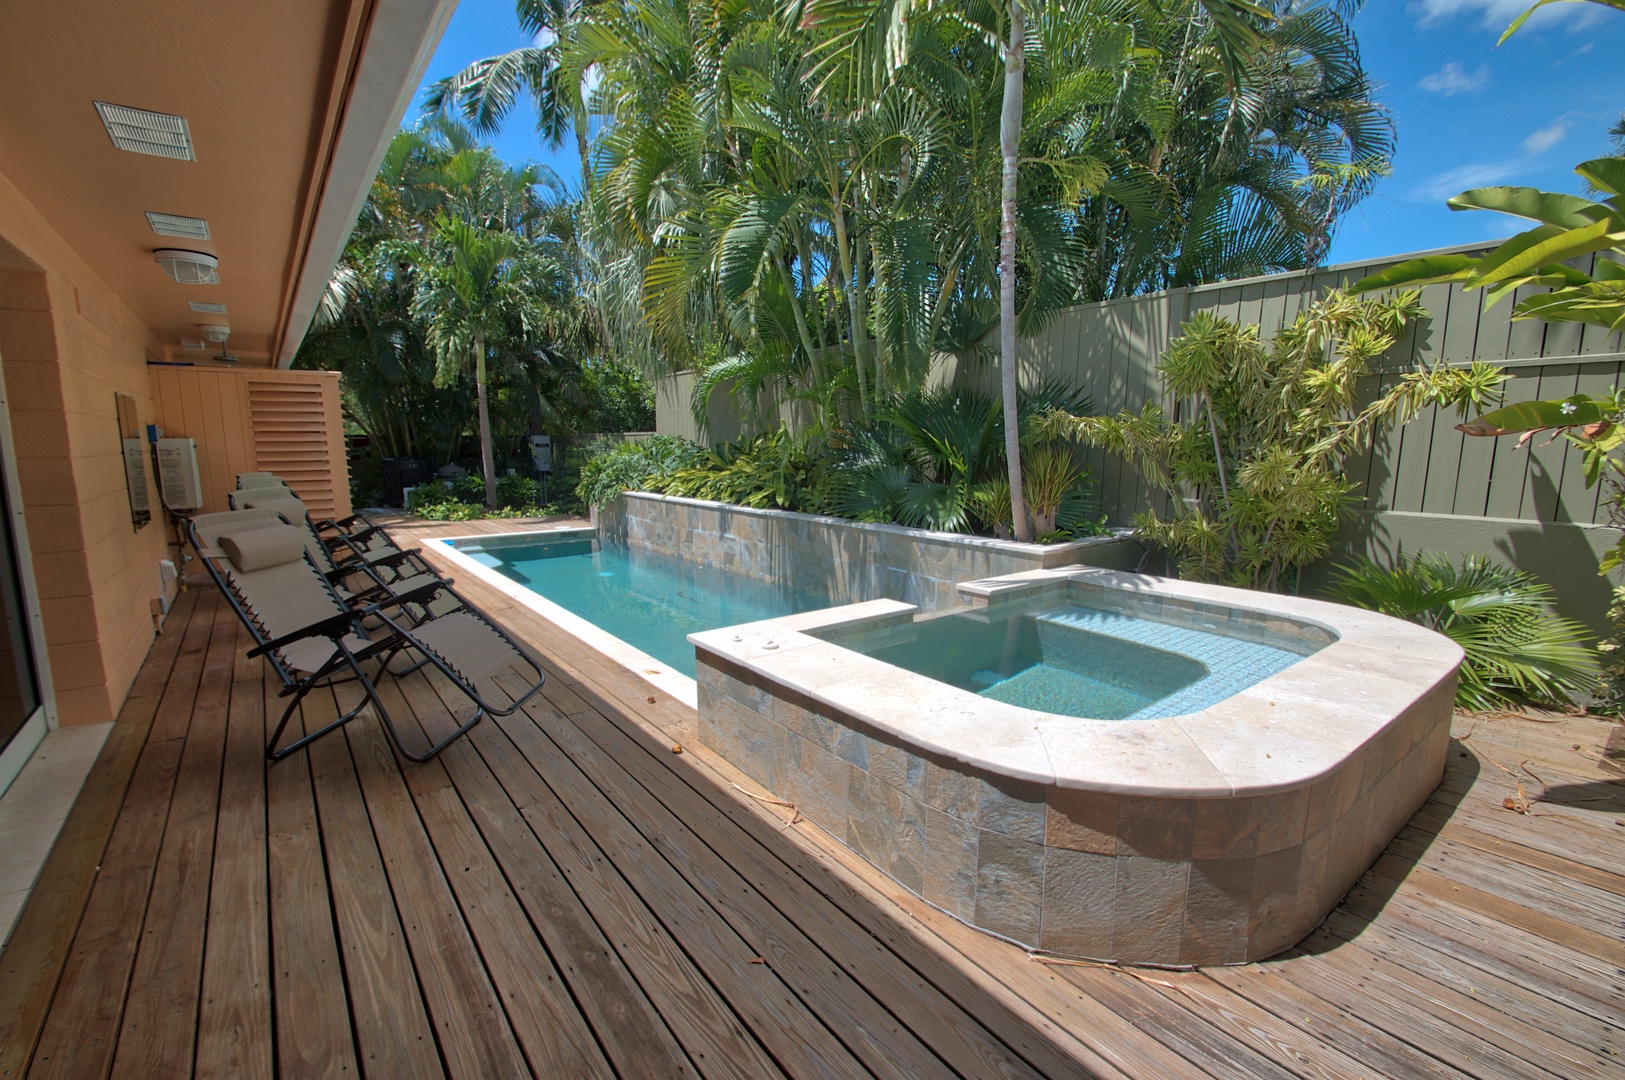 Pool and Jacuzzi Villa de Palmas Key West